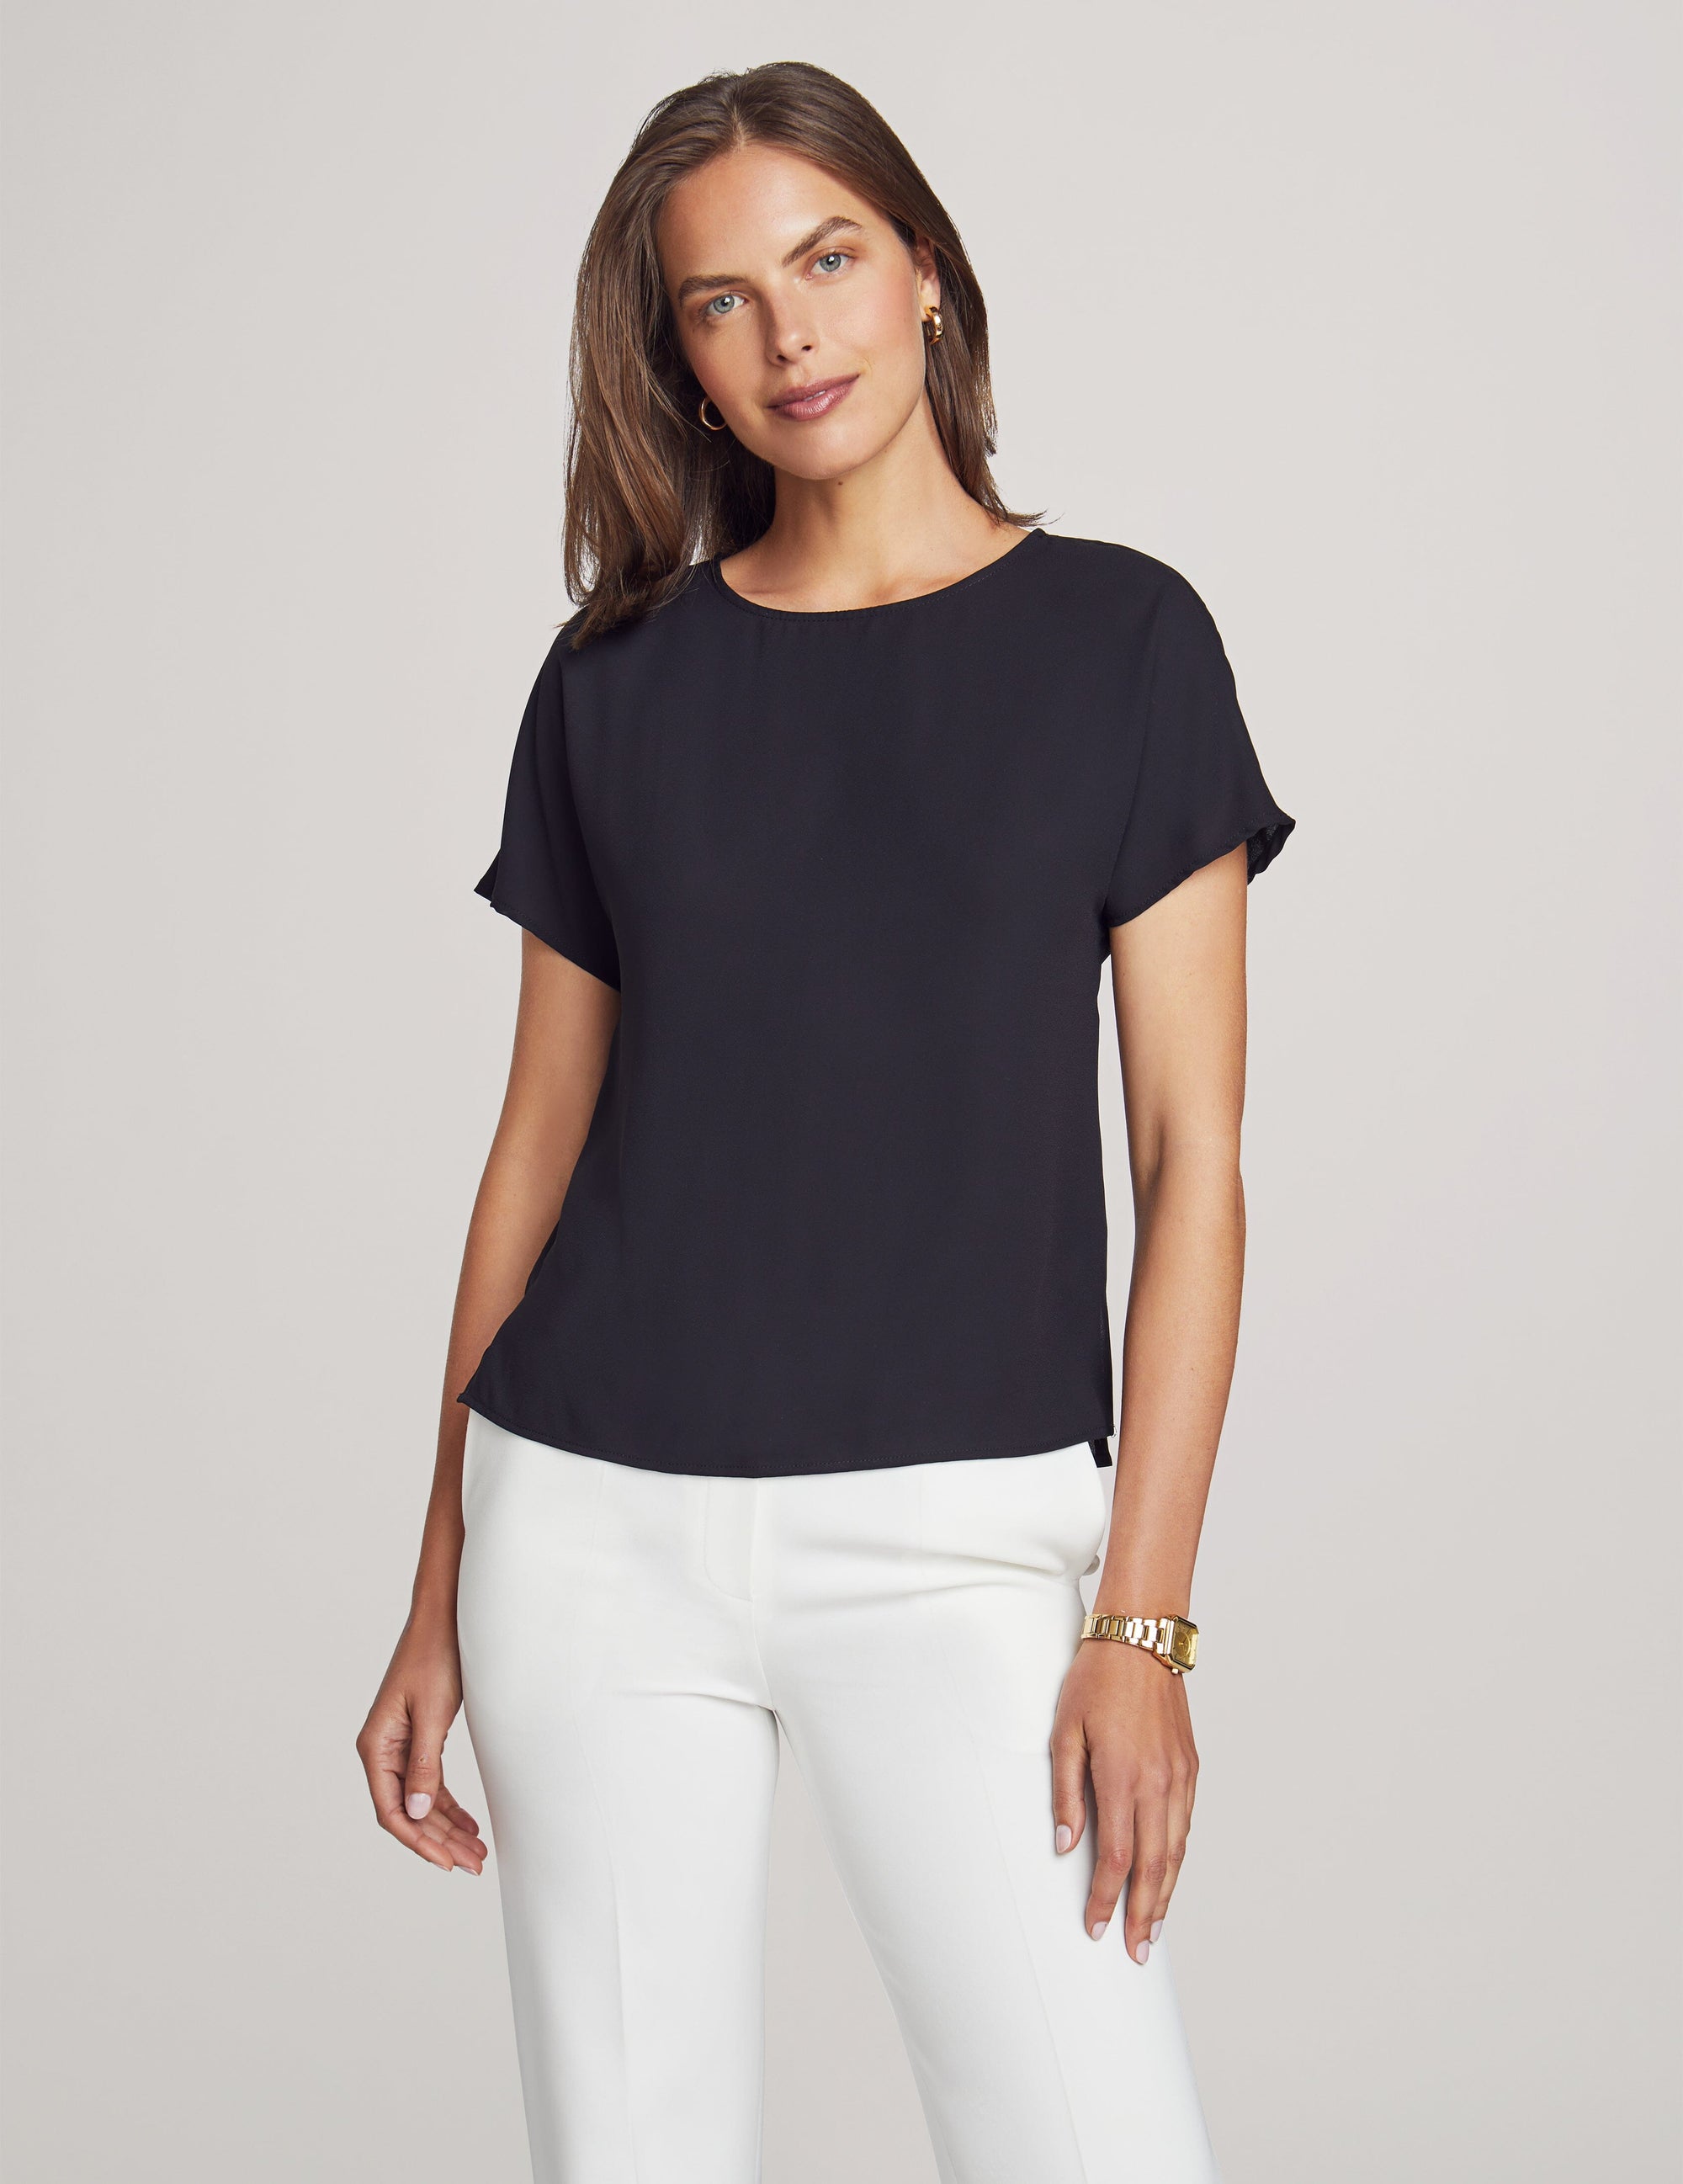 Tops: Tops, t-shirts, blouses & shirts, Womenswear